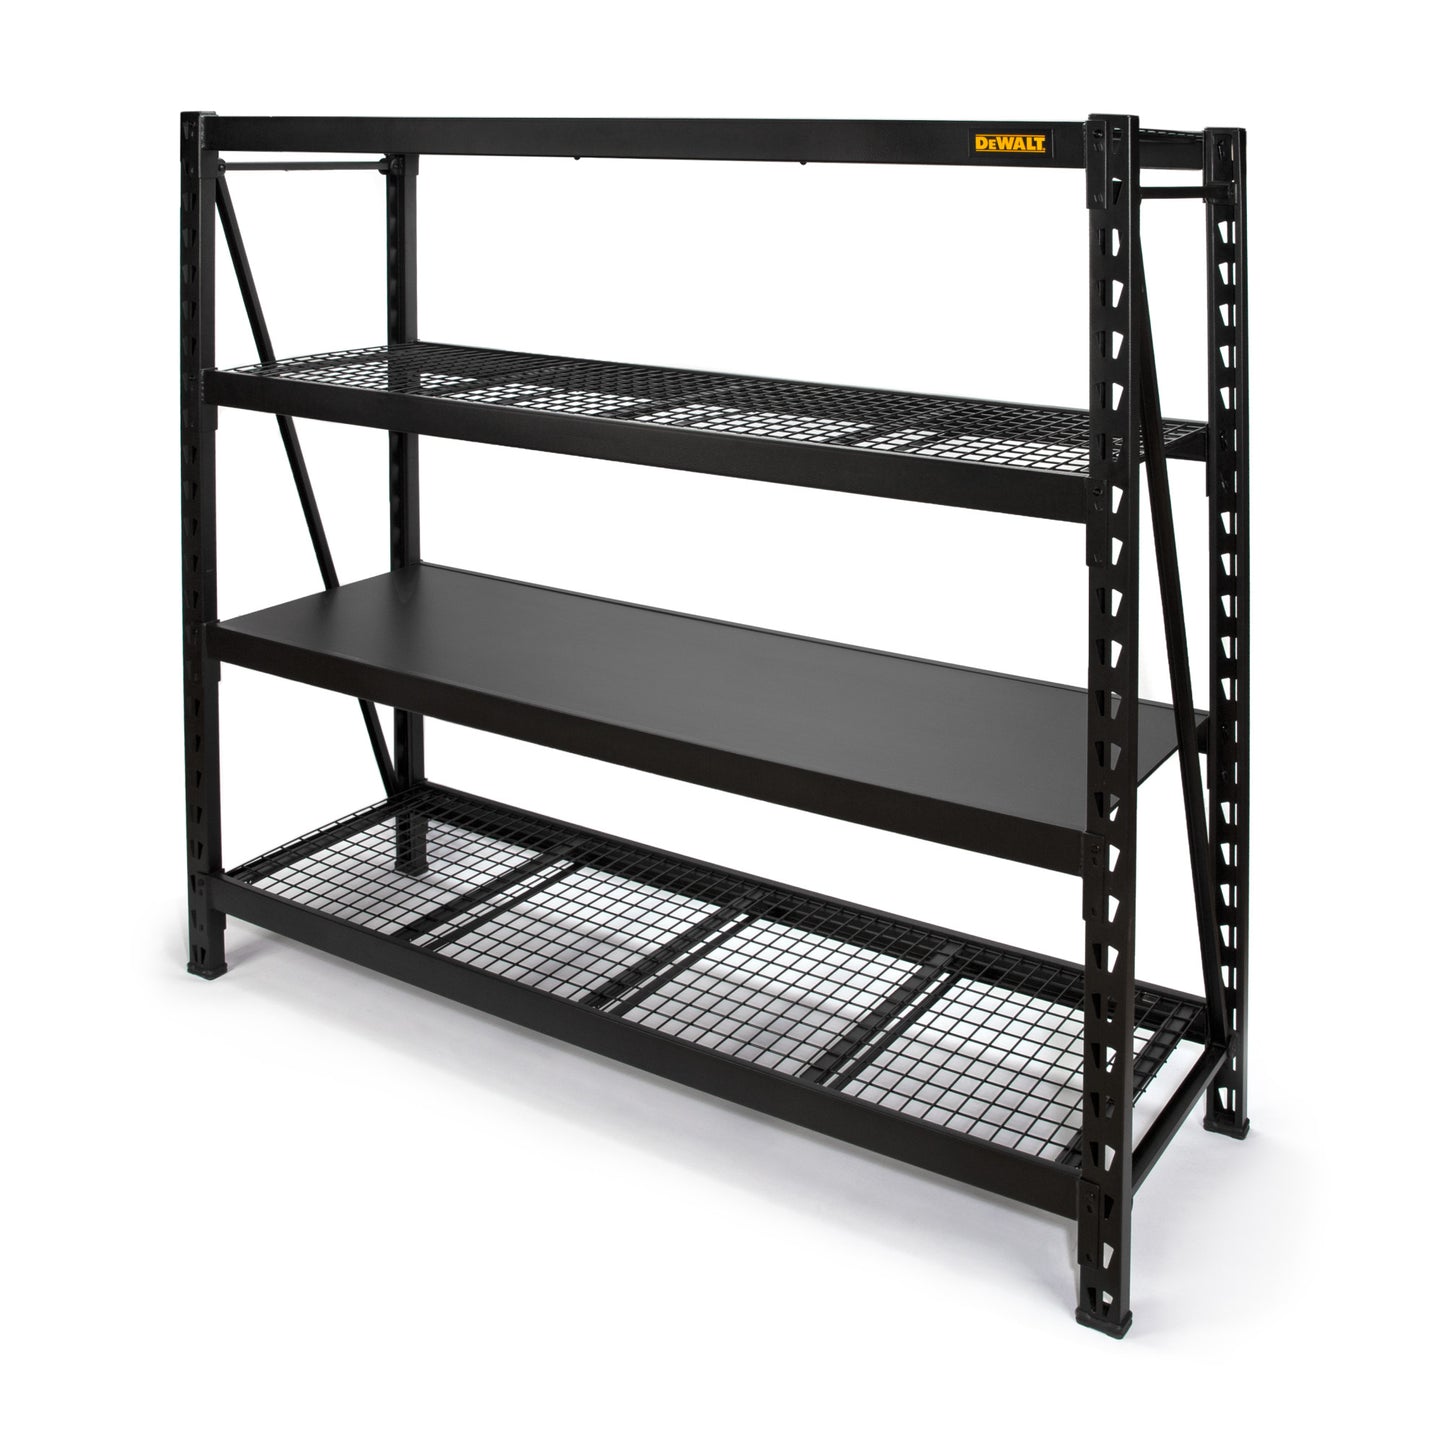 72 in. H x 77 in. W x 24 in. D 4-Shelf Black Industrial Storage Rack